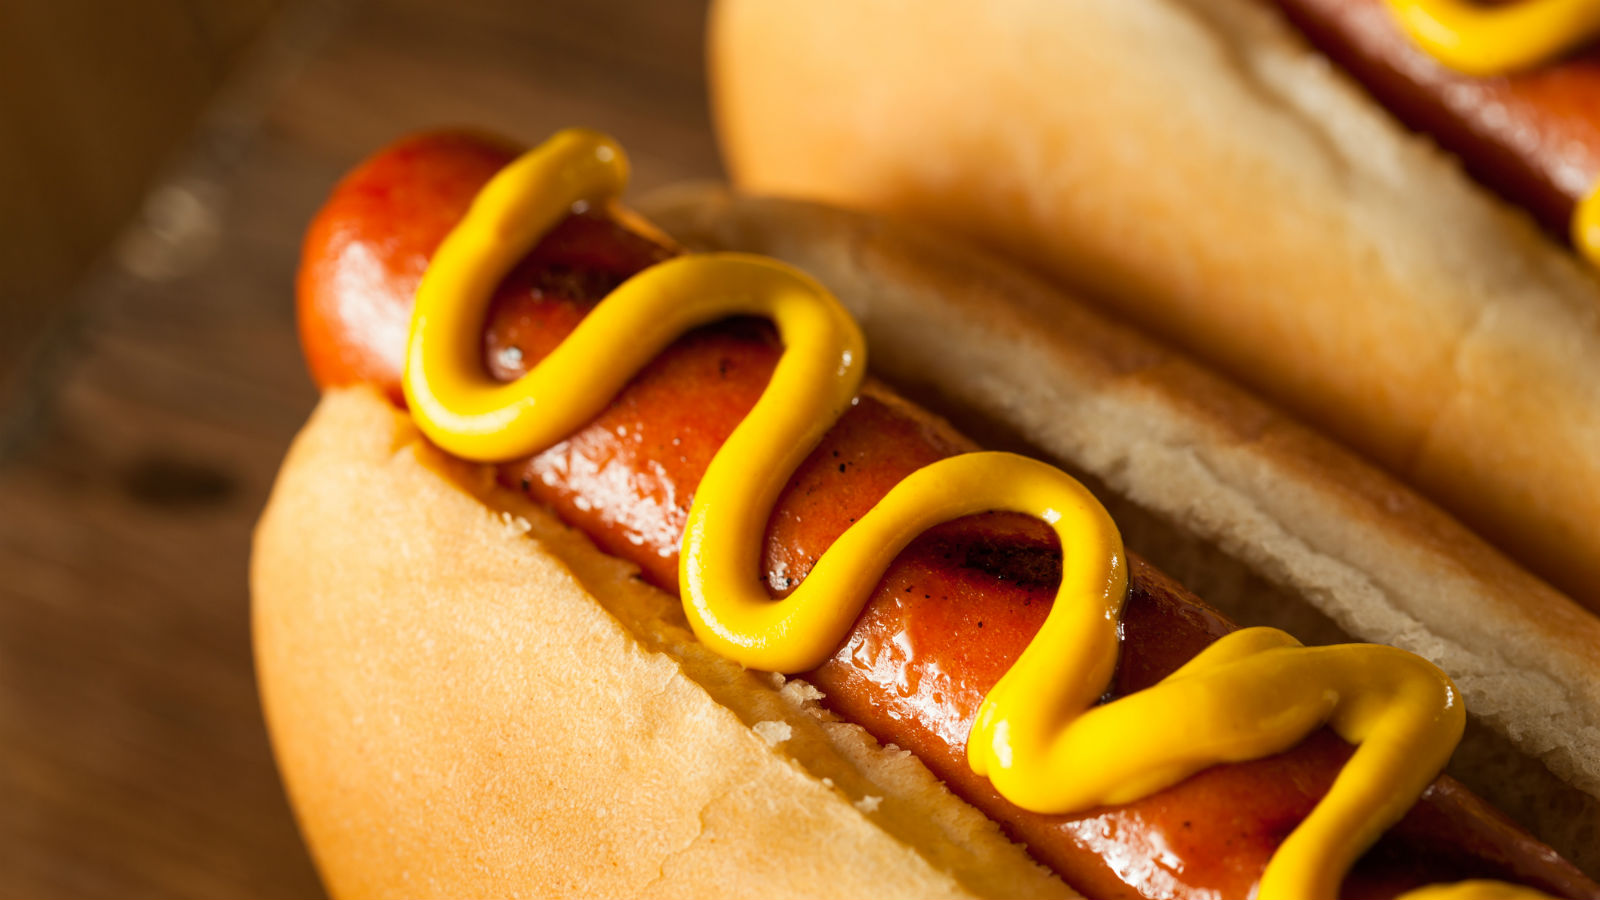 https://www.myjewishlearning.com/wp-content/uploads/2016/07/history-of-the-kosher-hot-dog-main1.jpg